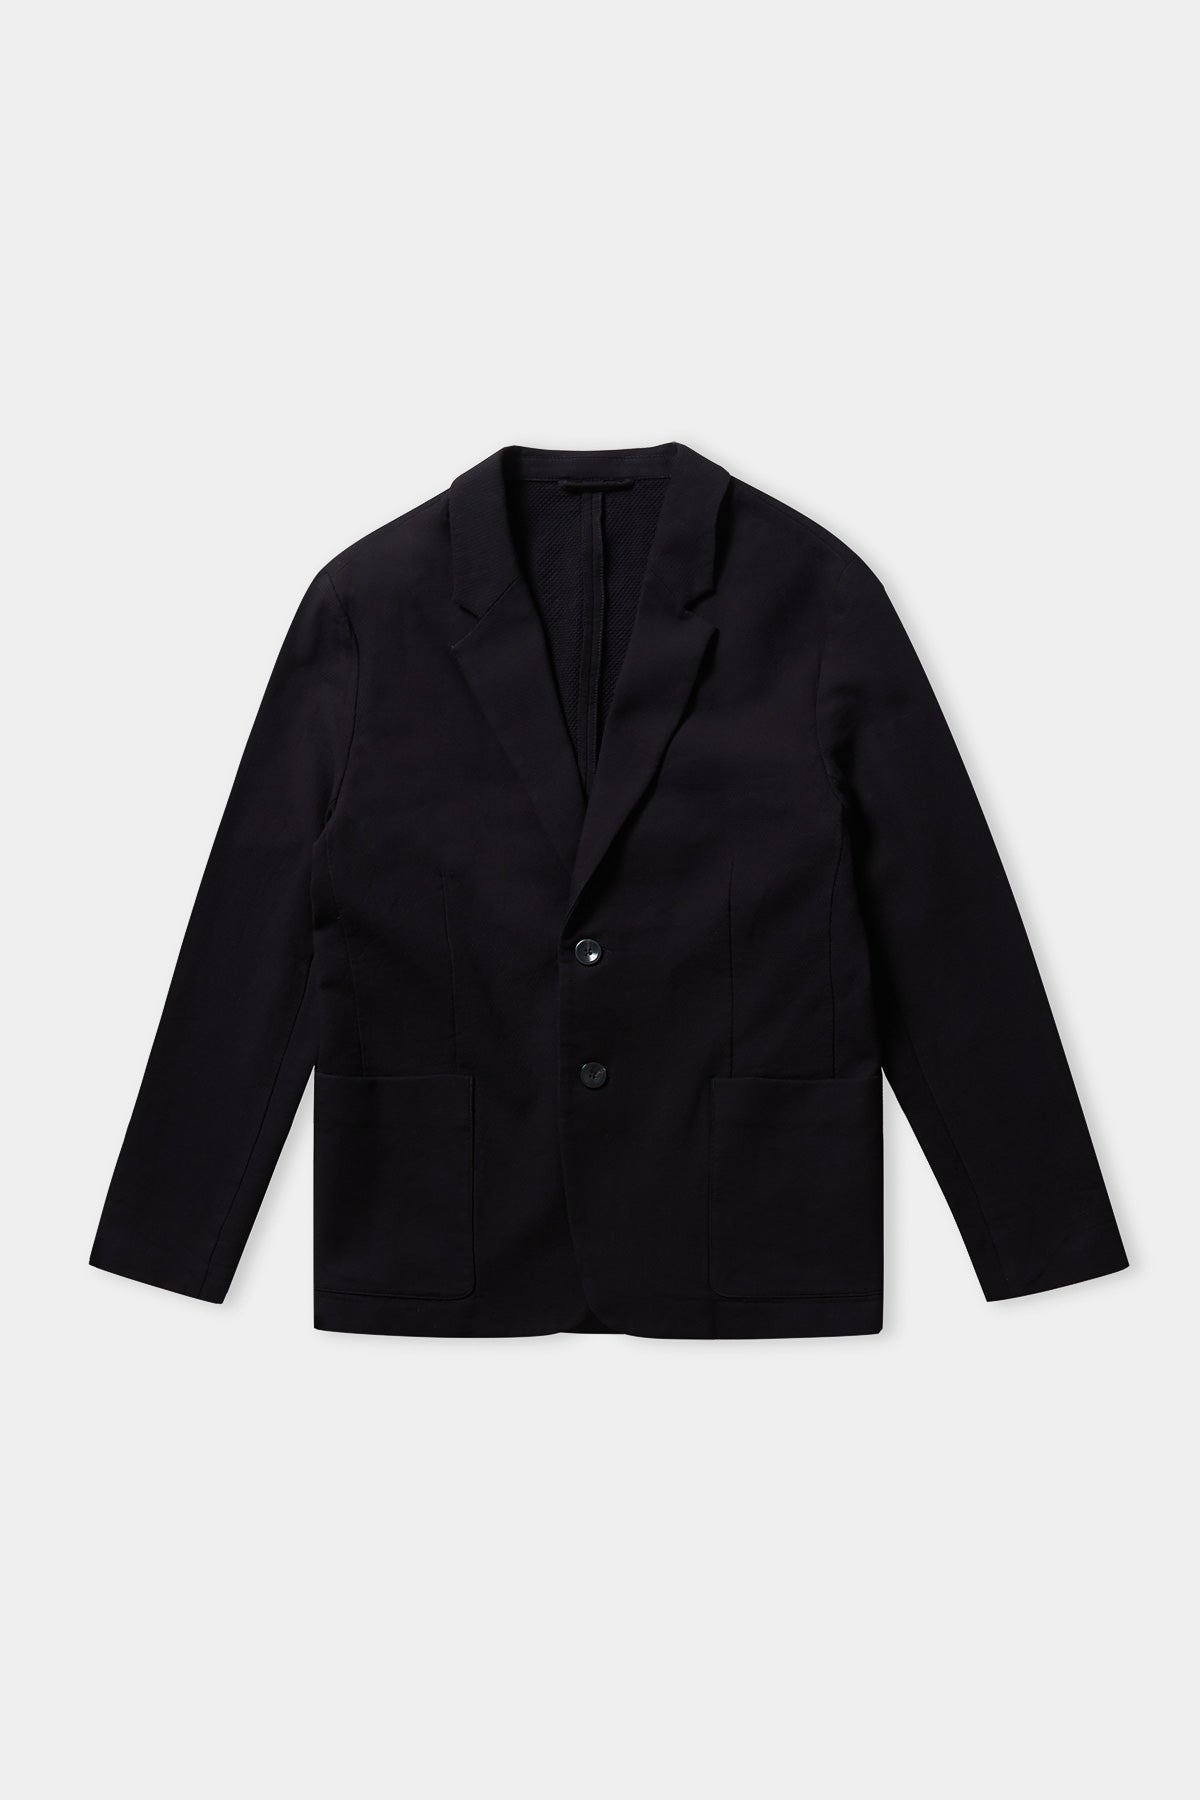 ENVER blazer eco structured black